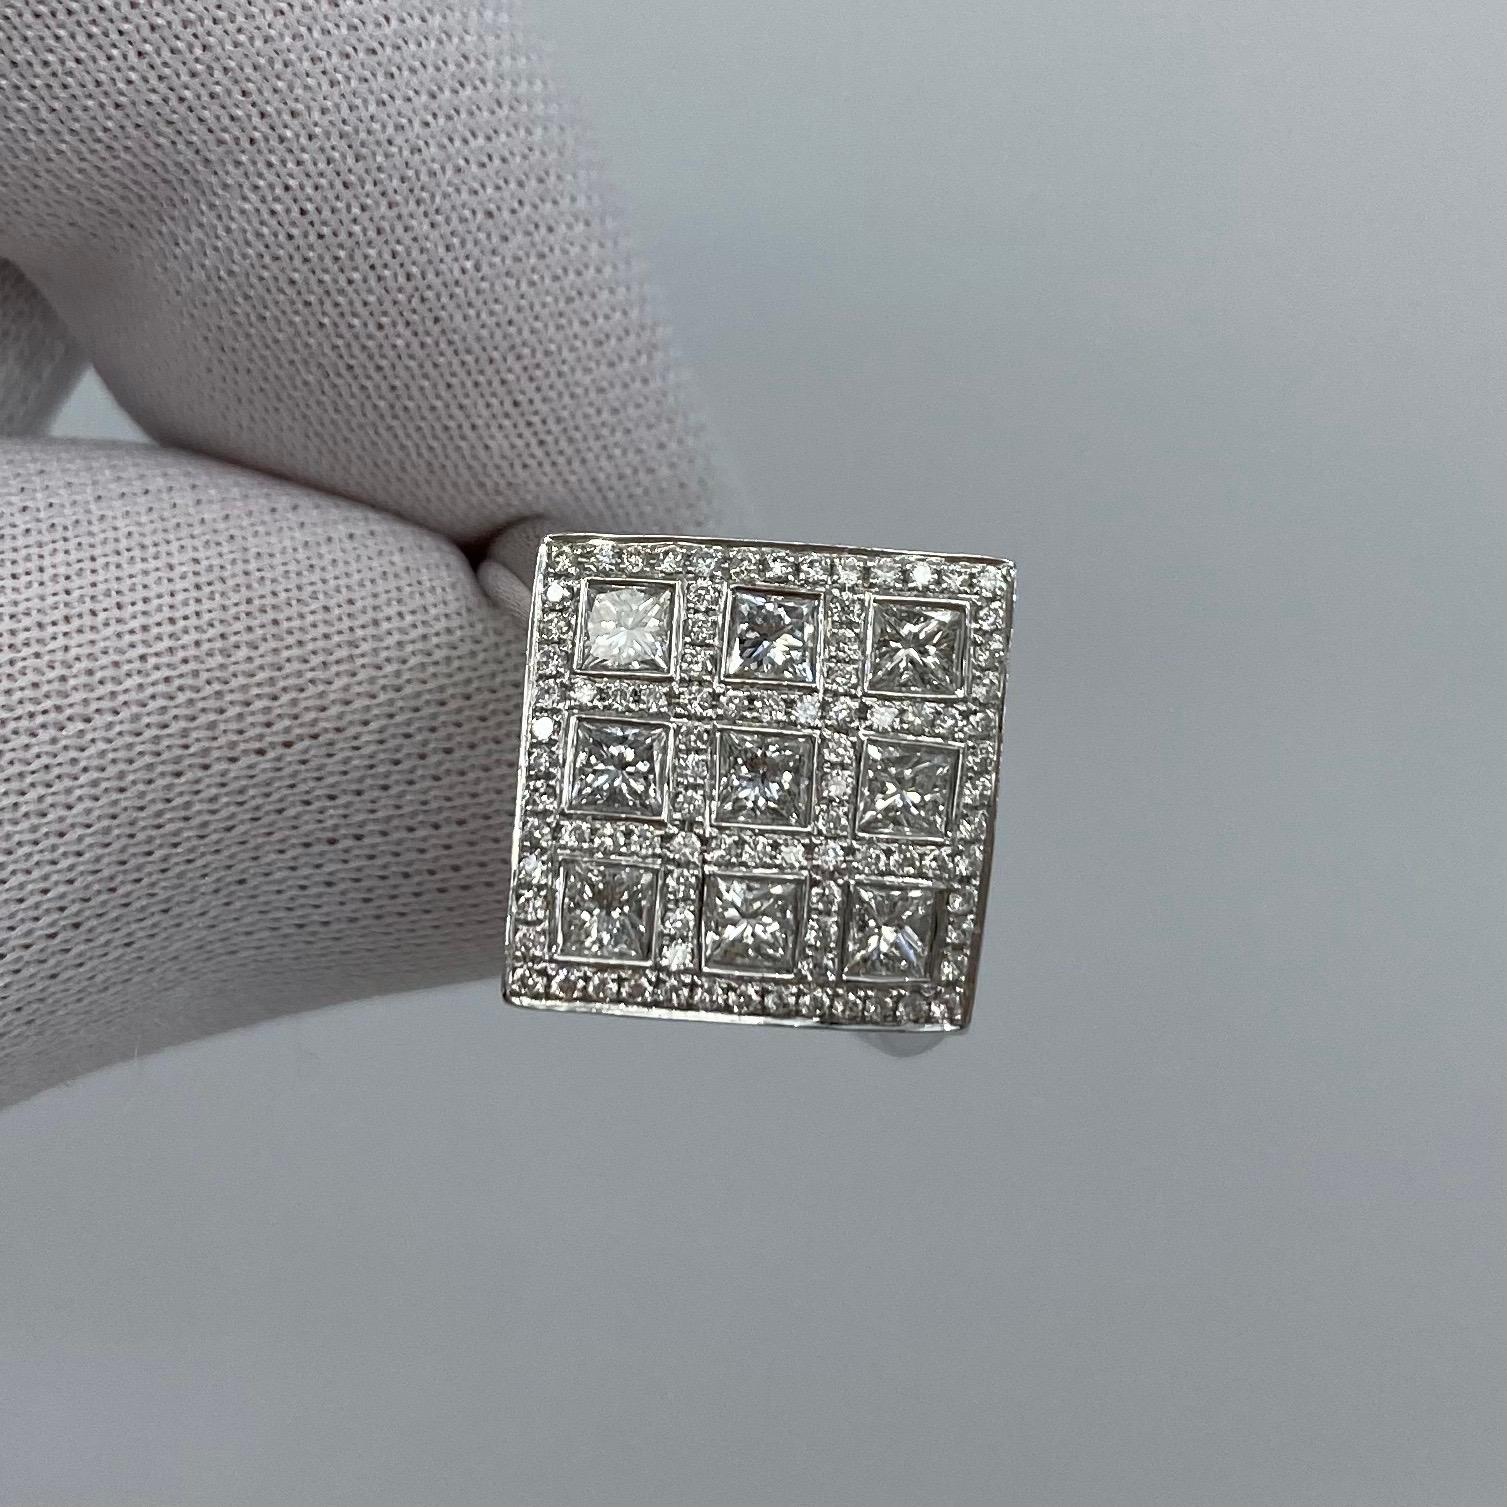 2.08 Carat Art Deco Style Diamond Cluster Ring 18 Karat White Gold Princess Cut For Sale 3